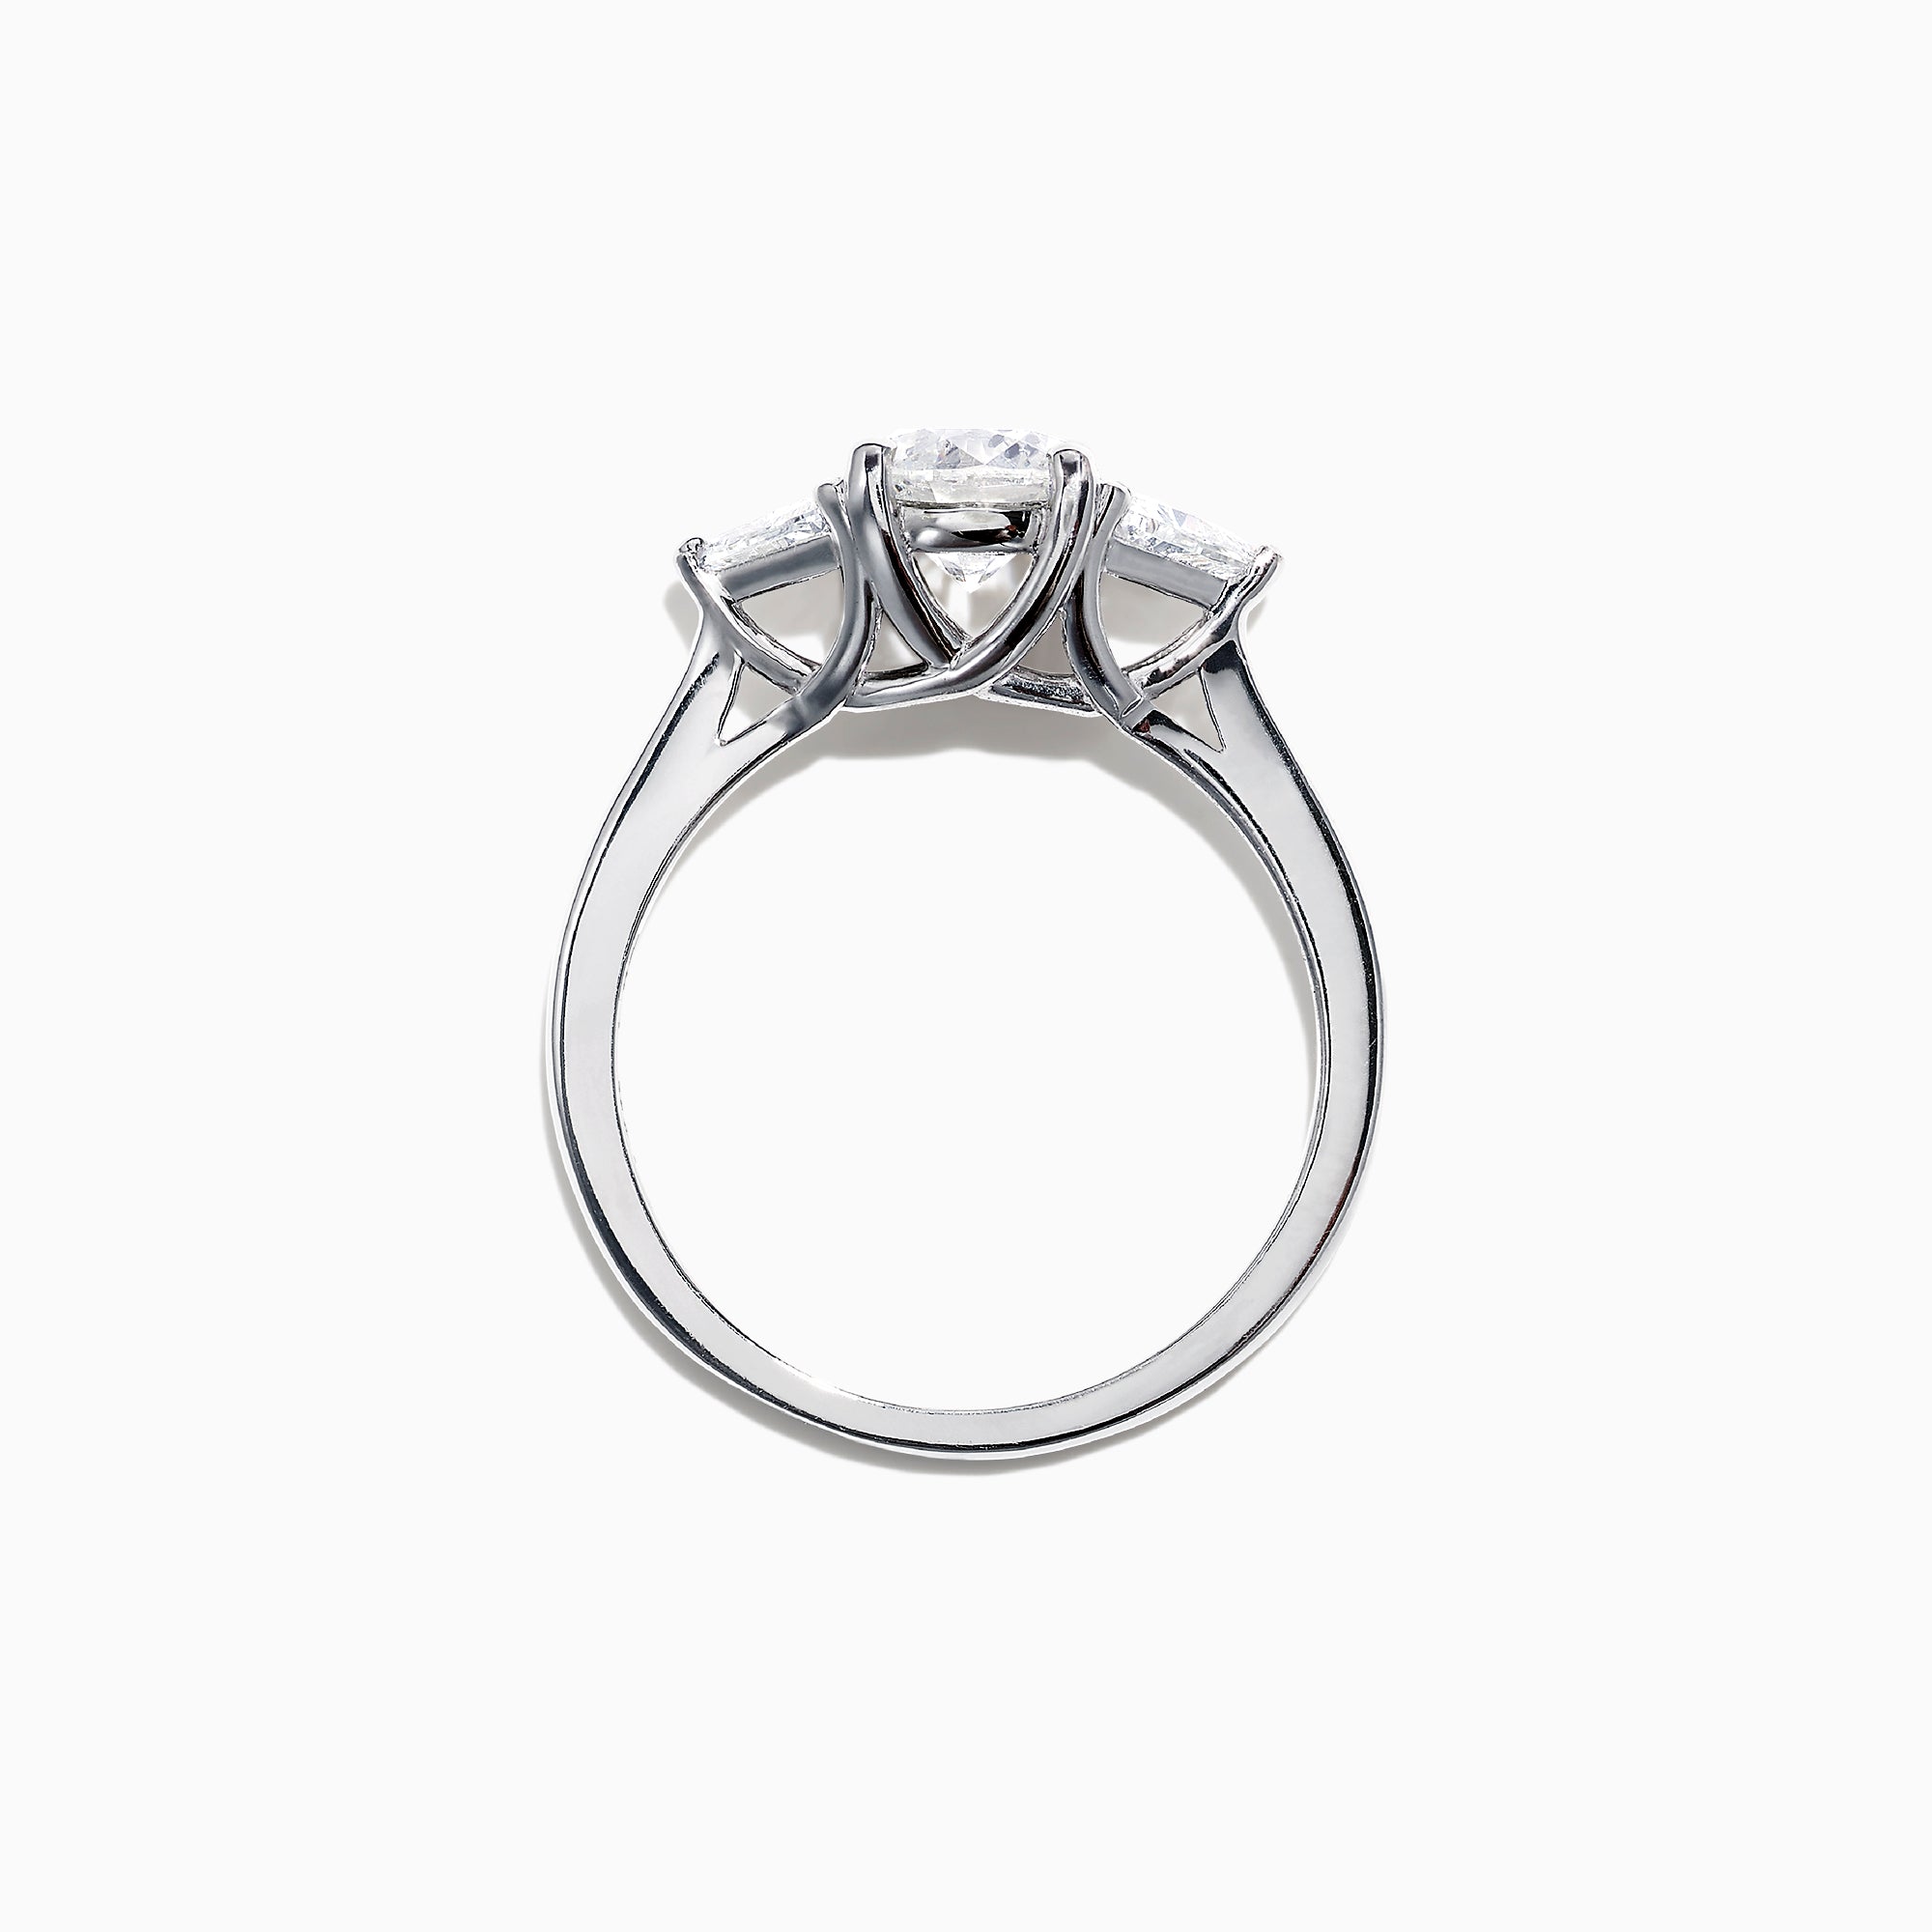 Effy Bridal 14K White Gold 3 Stone Diamond Ring, 1.25 TCW